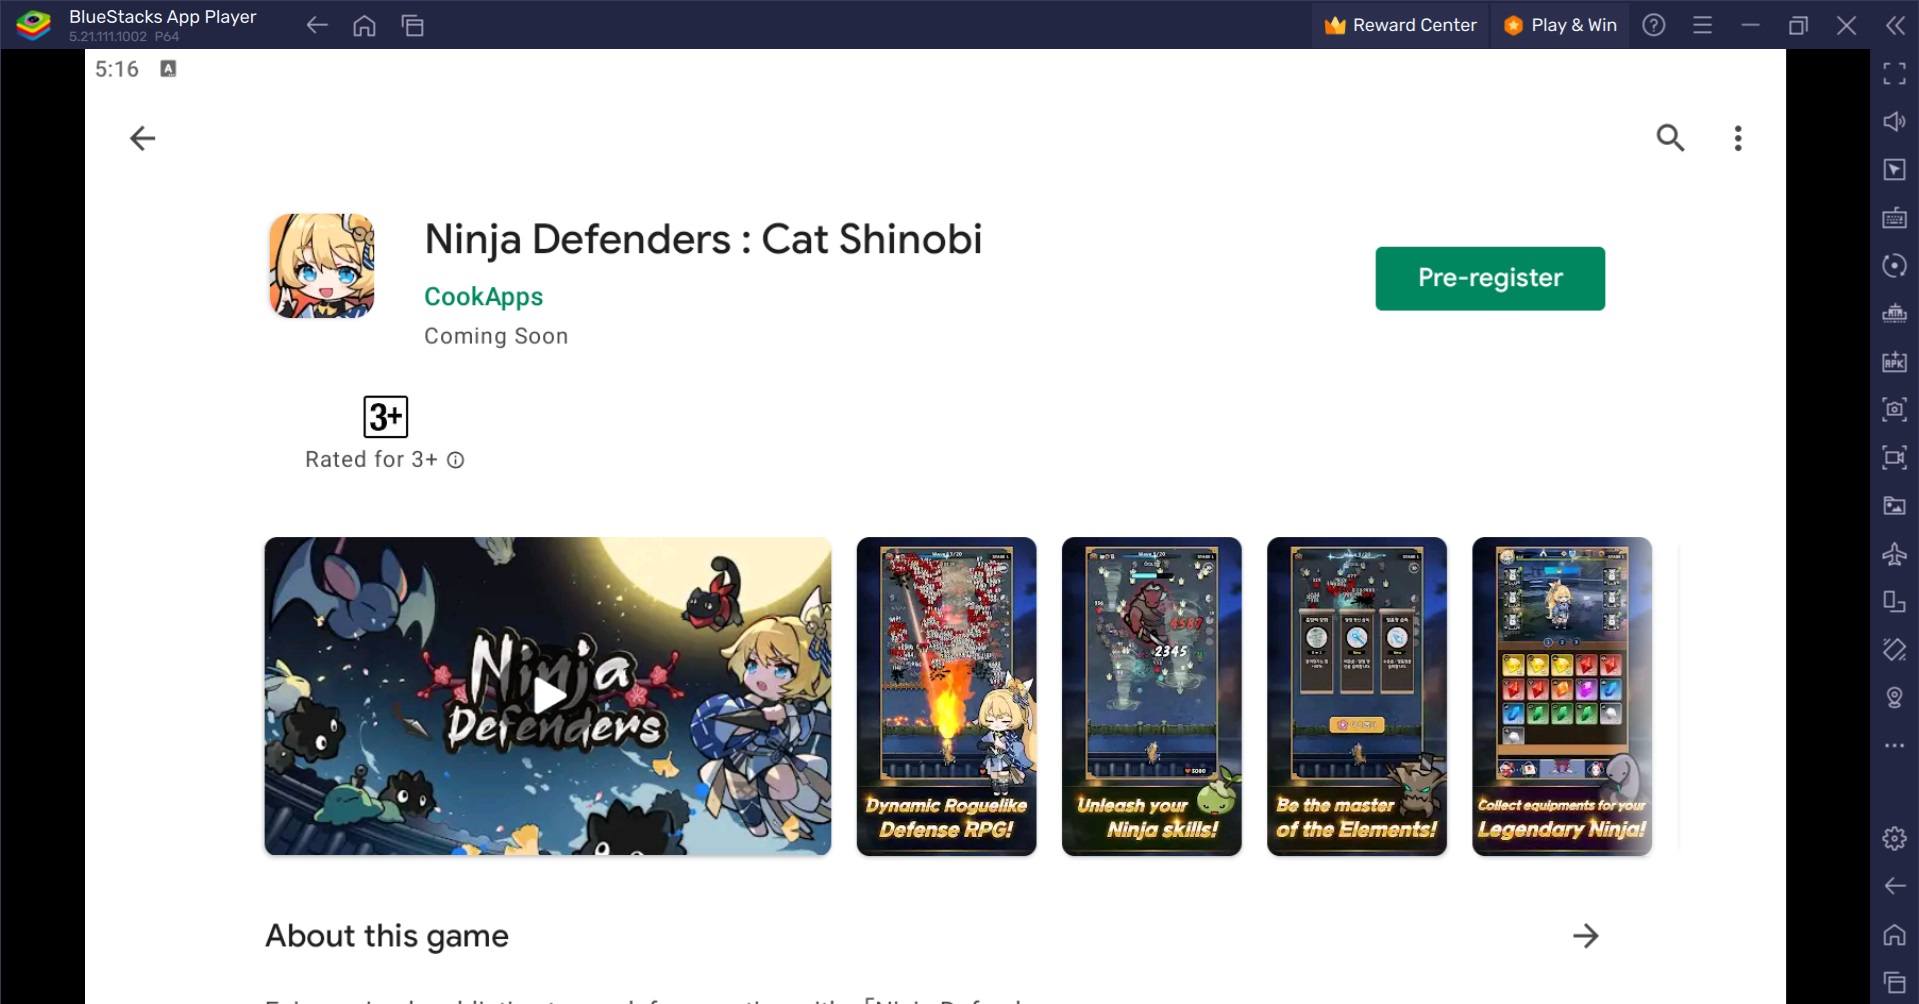 How to Play Ninja Defenders : Cat Shinobi on PC with BlueStacks